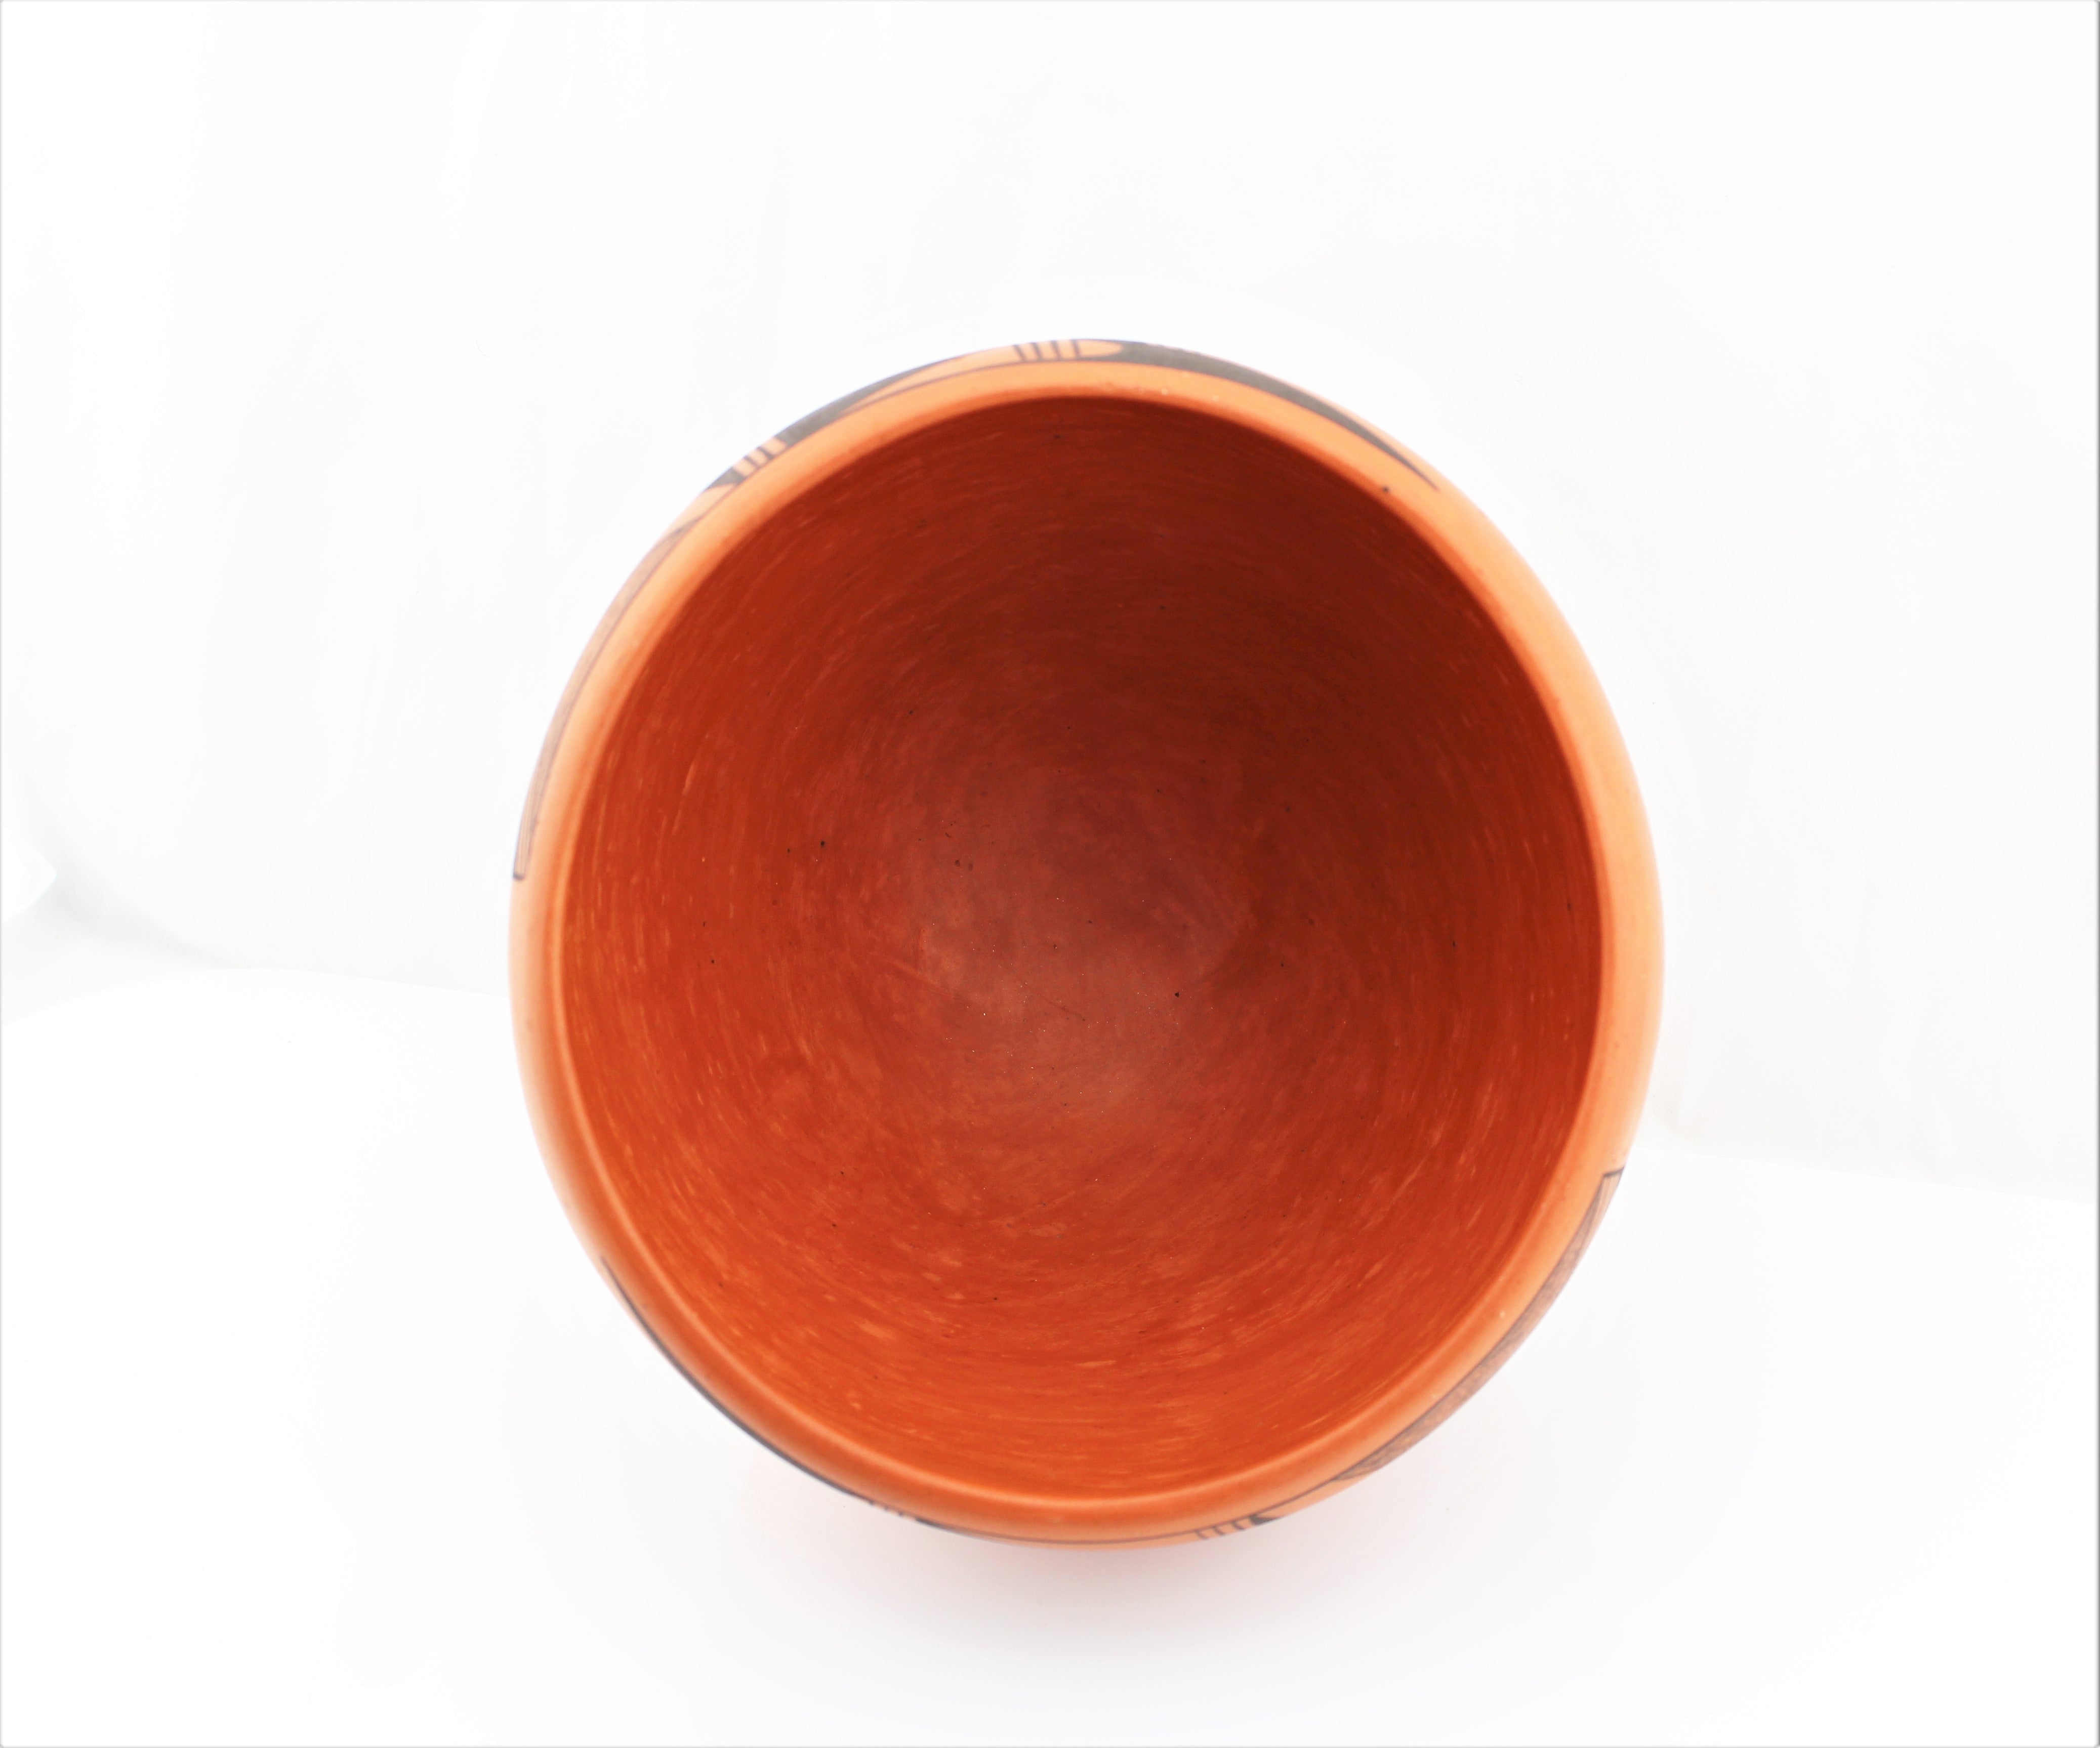 Hopi Tewa Village Pottery Bowl